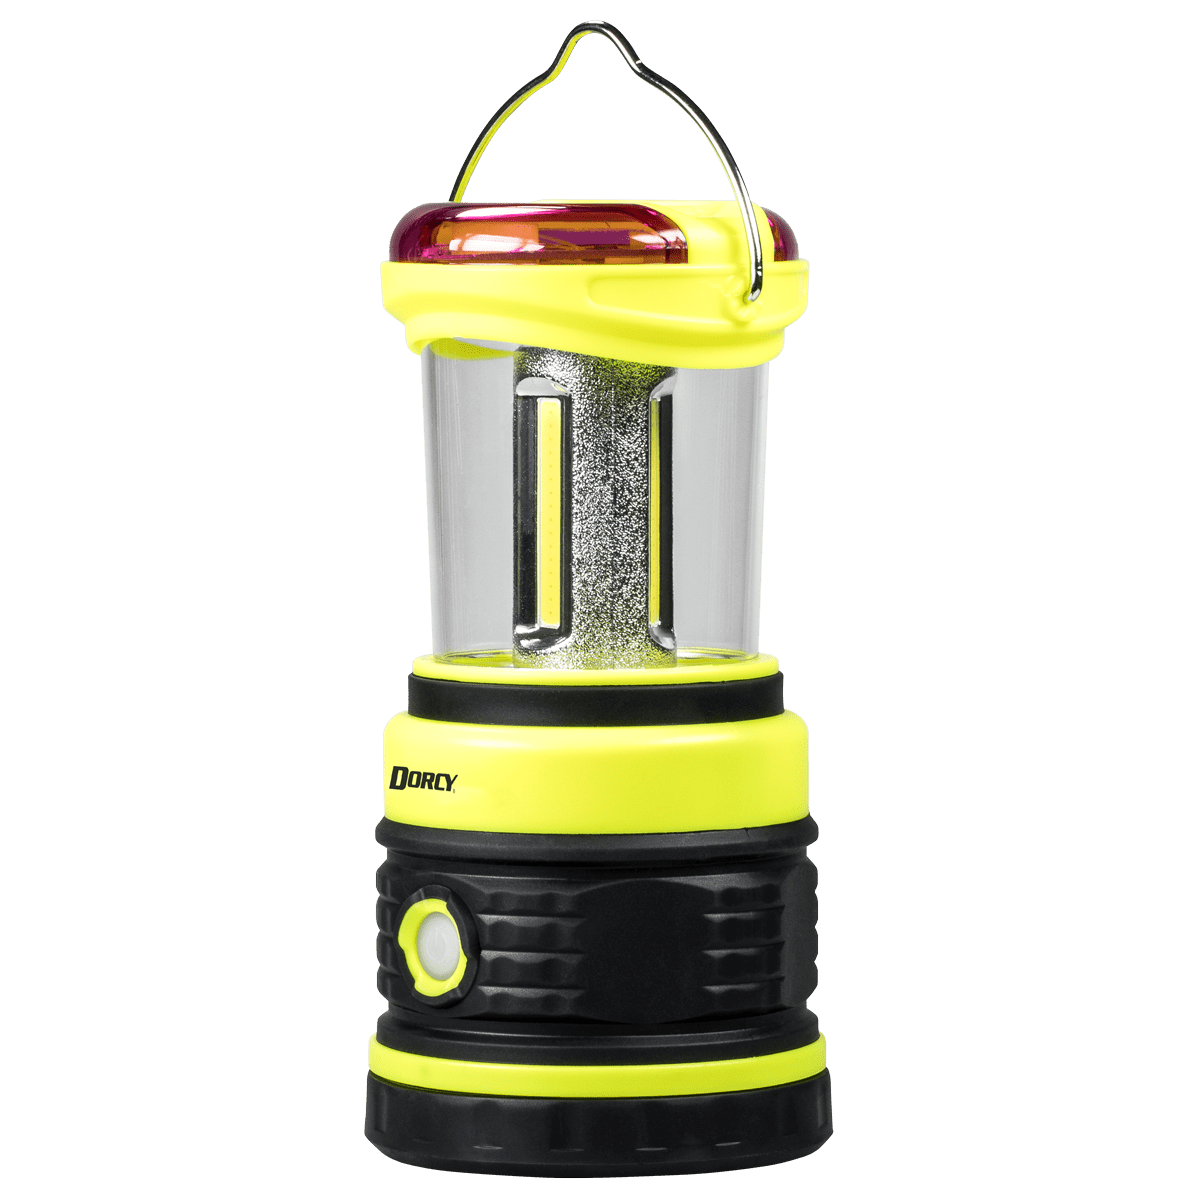 High Tech LED Lanterns - Dorcy News